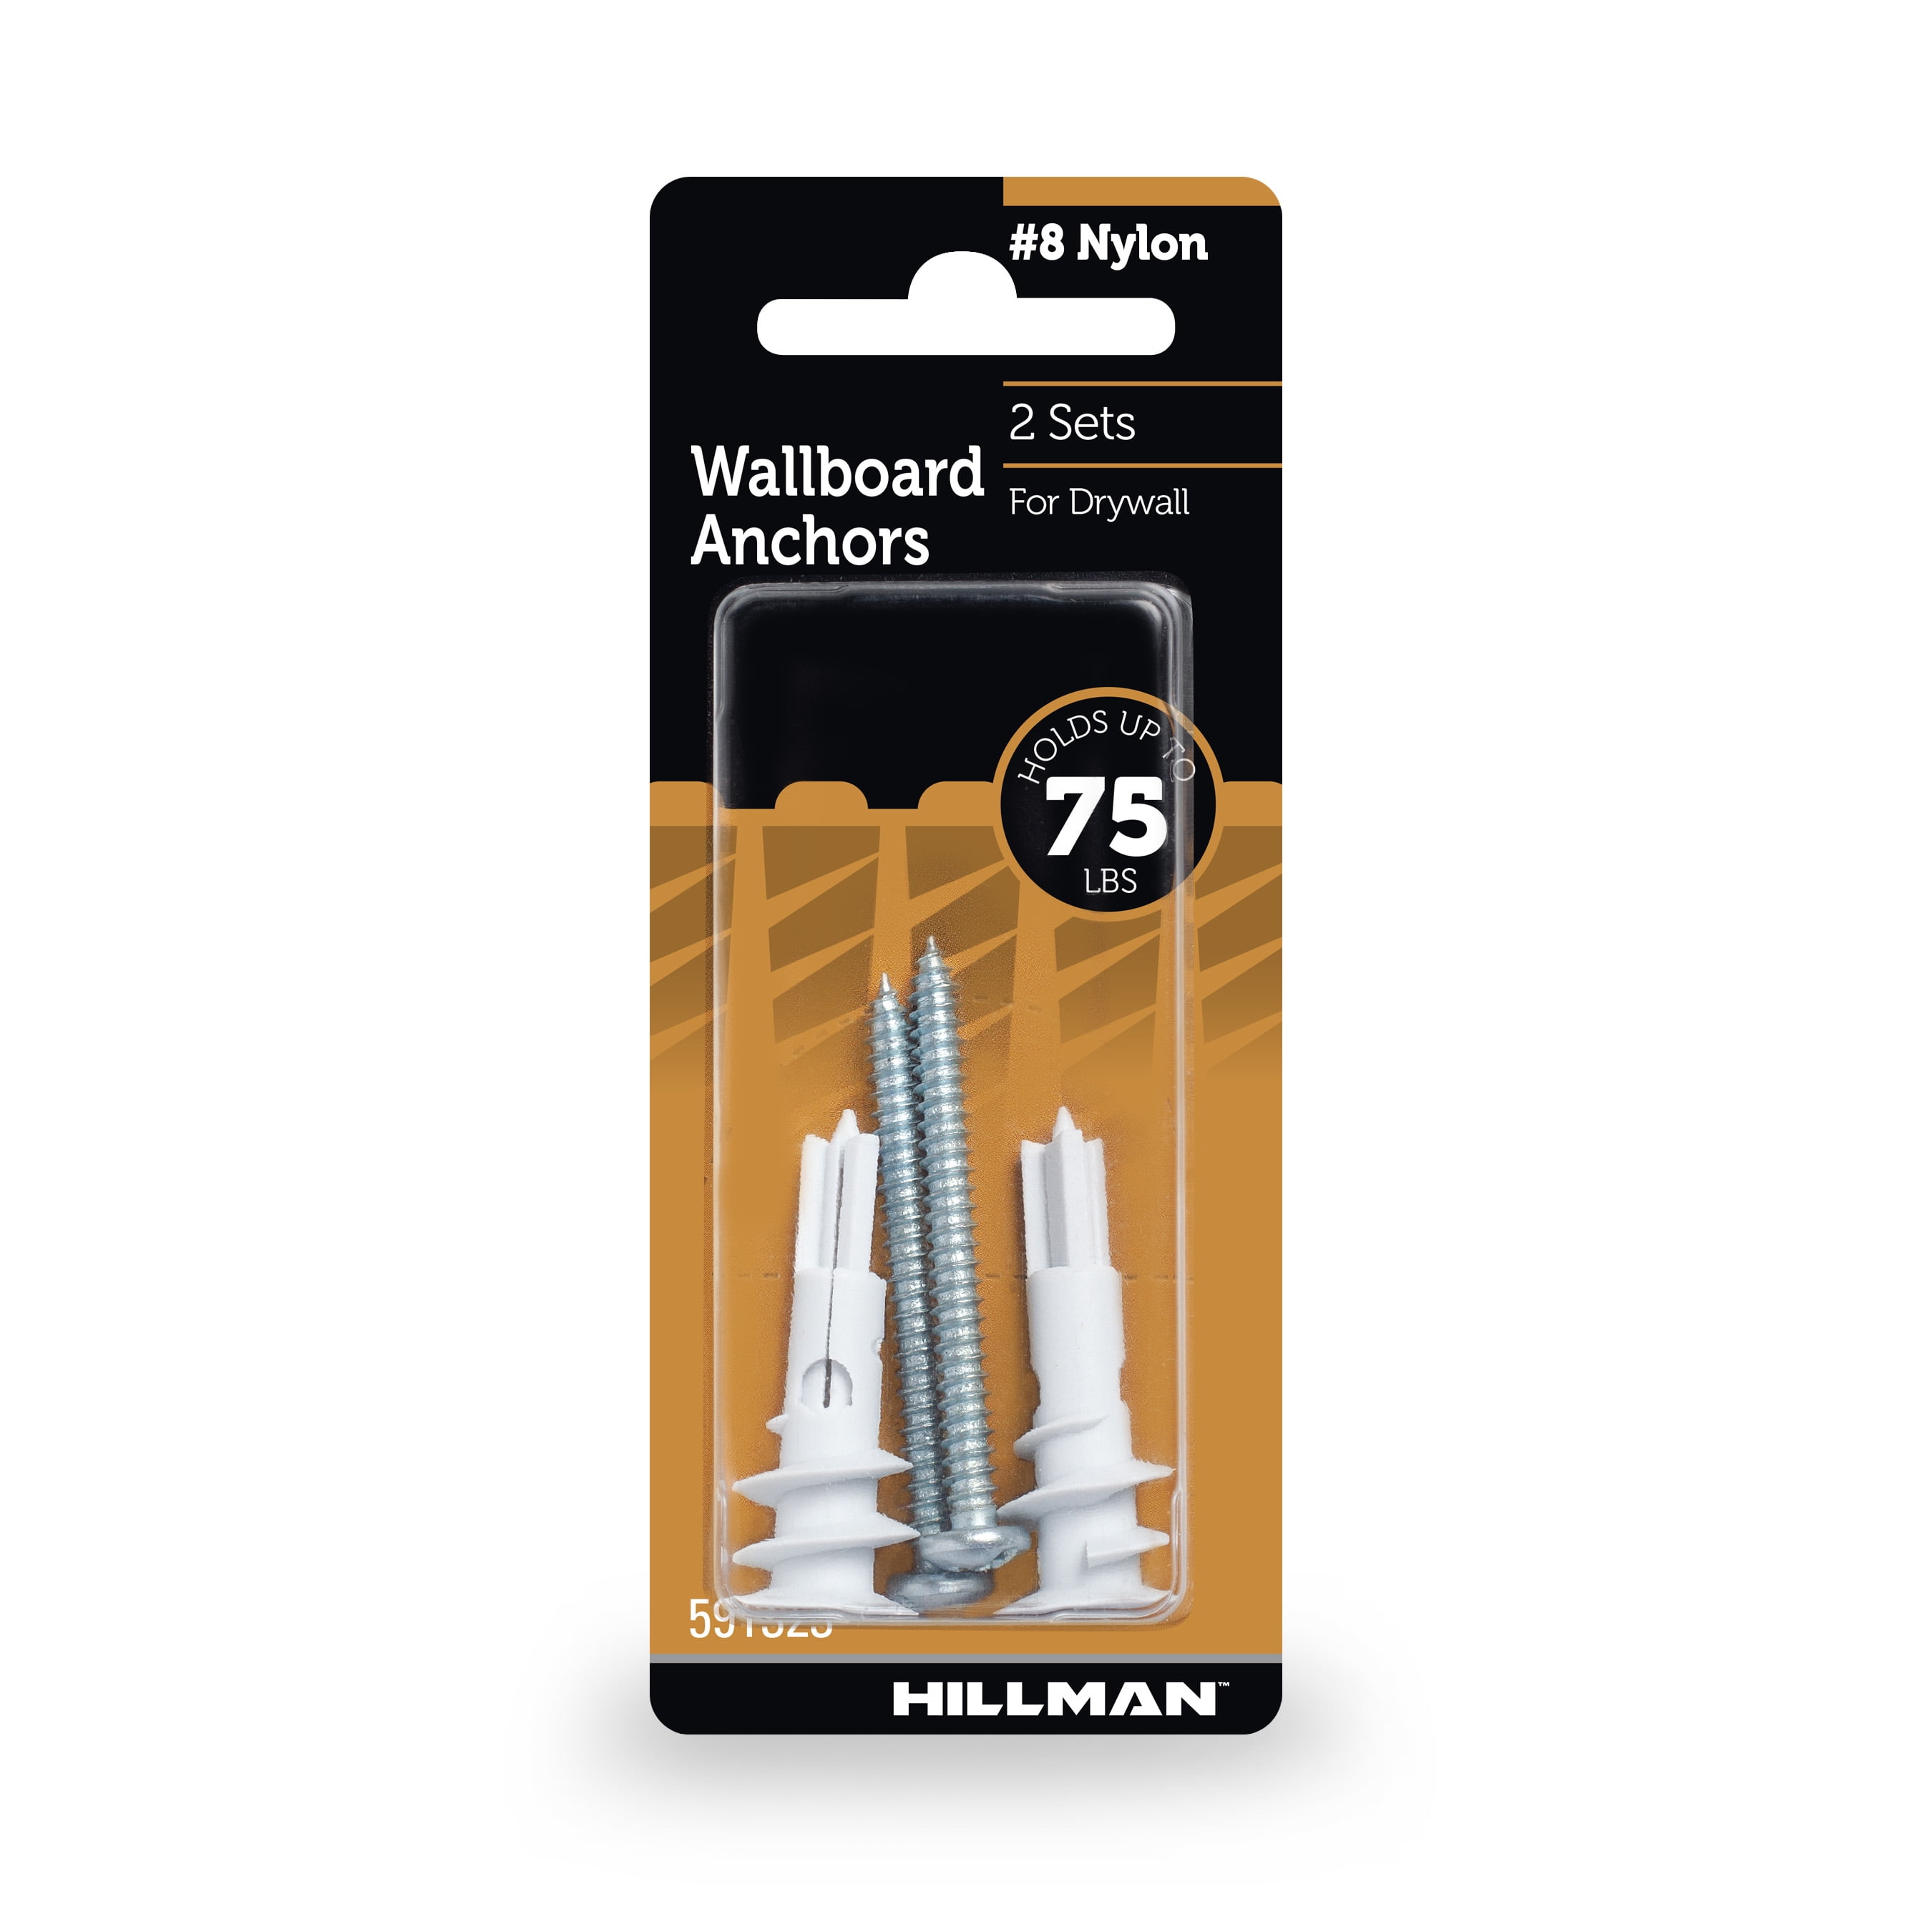 Hillman Wallboard Drywall Anchor Screws, Pan Head Phillips Screw, Nylon, #8, 2 Sets